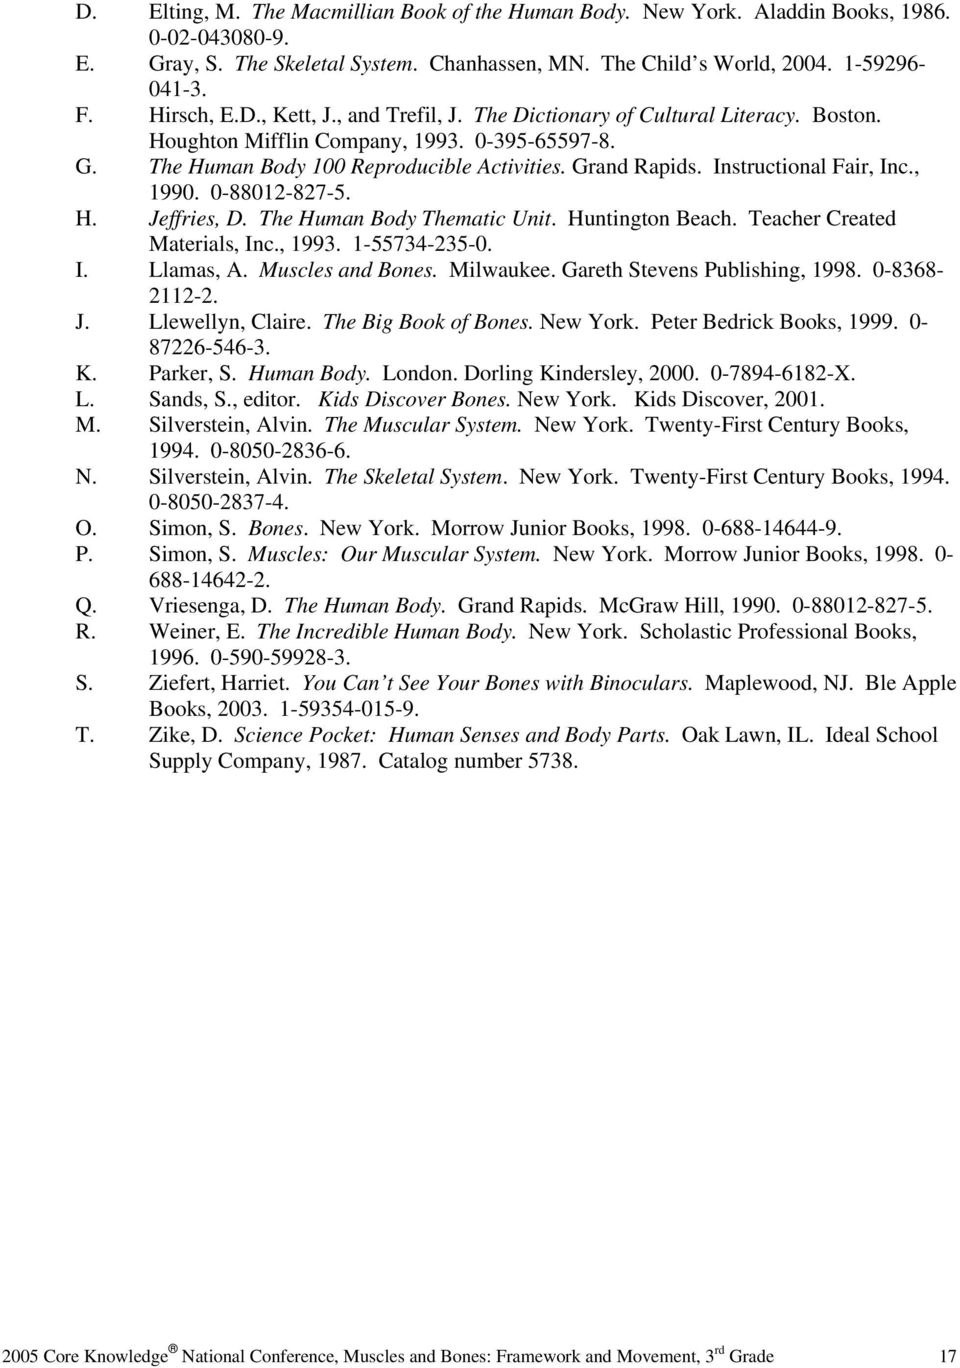 Instructional Fair, Inc., 1990. 0-88012-827-5. H. Jeffries, D. The Human Body Thematic Unit. Huntington Beach. Teacher Created Materials, Inc., 1993. 1-55734-235-0. I. Llamas, A. Muscles and Bones.